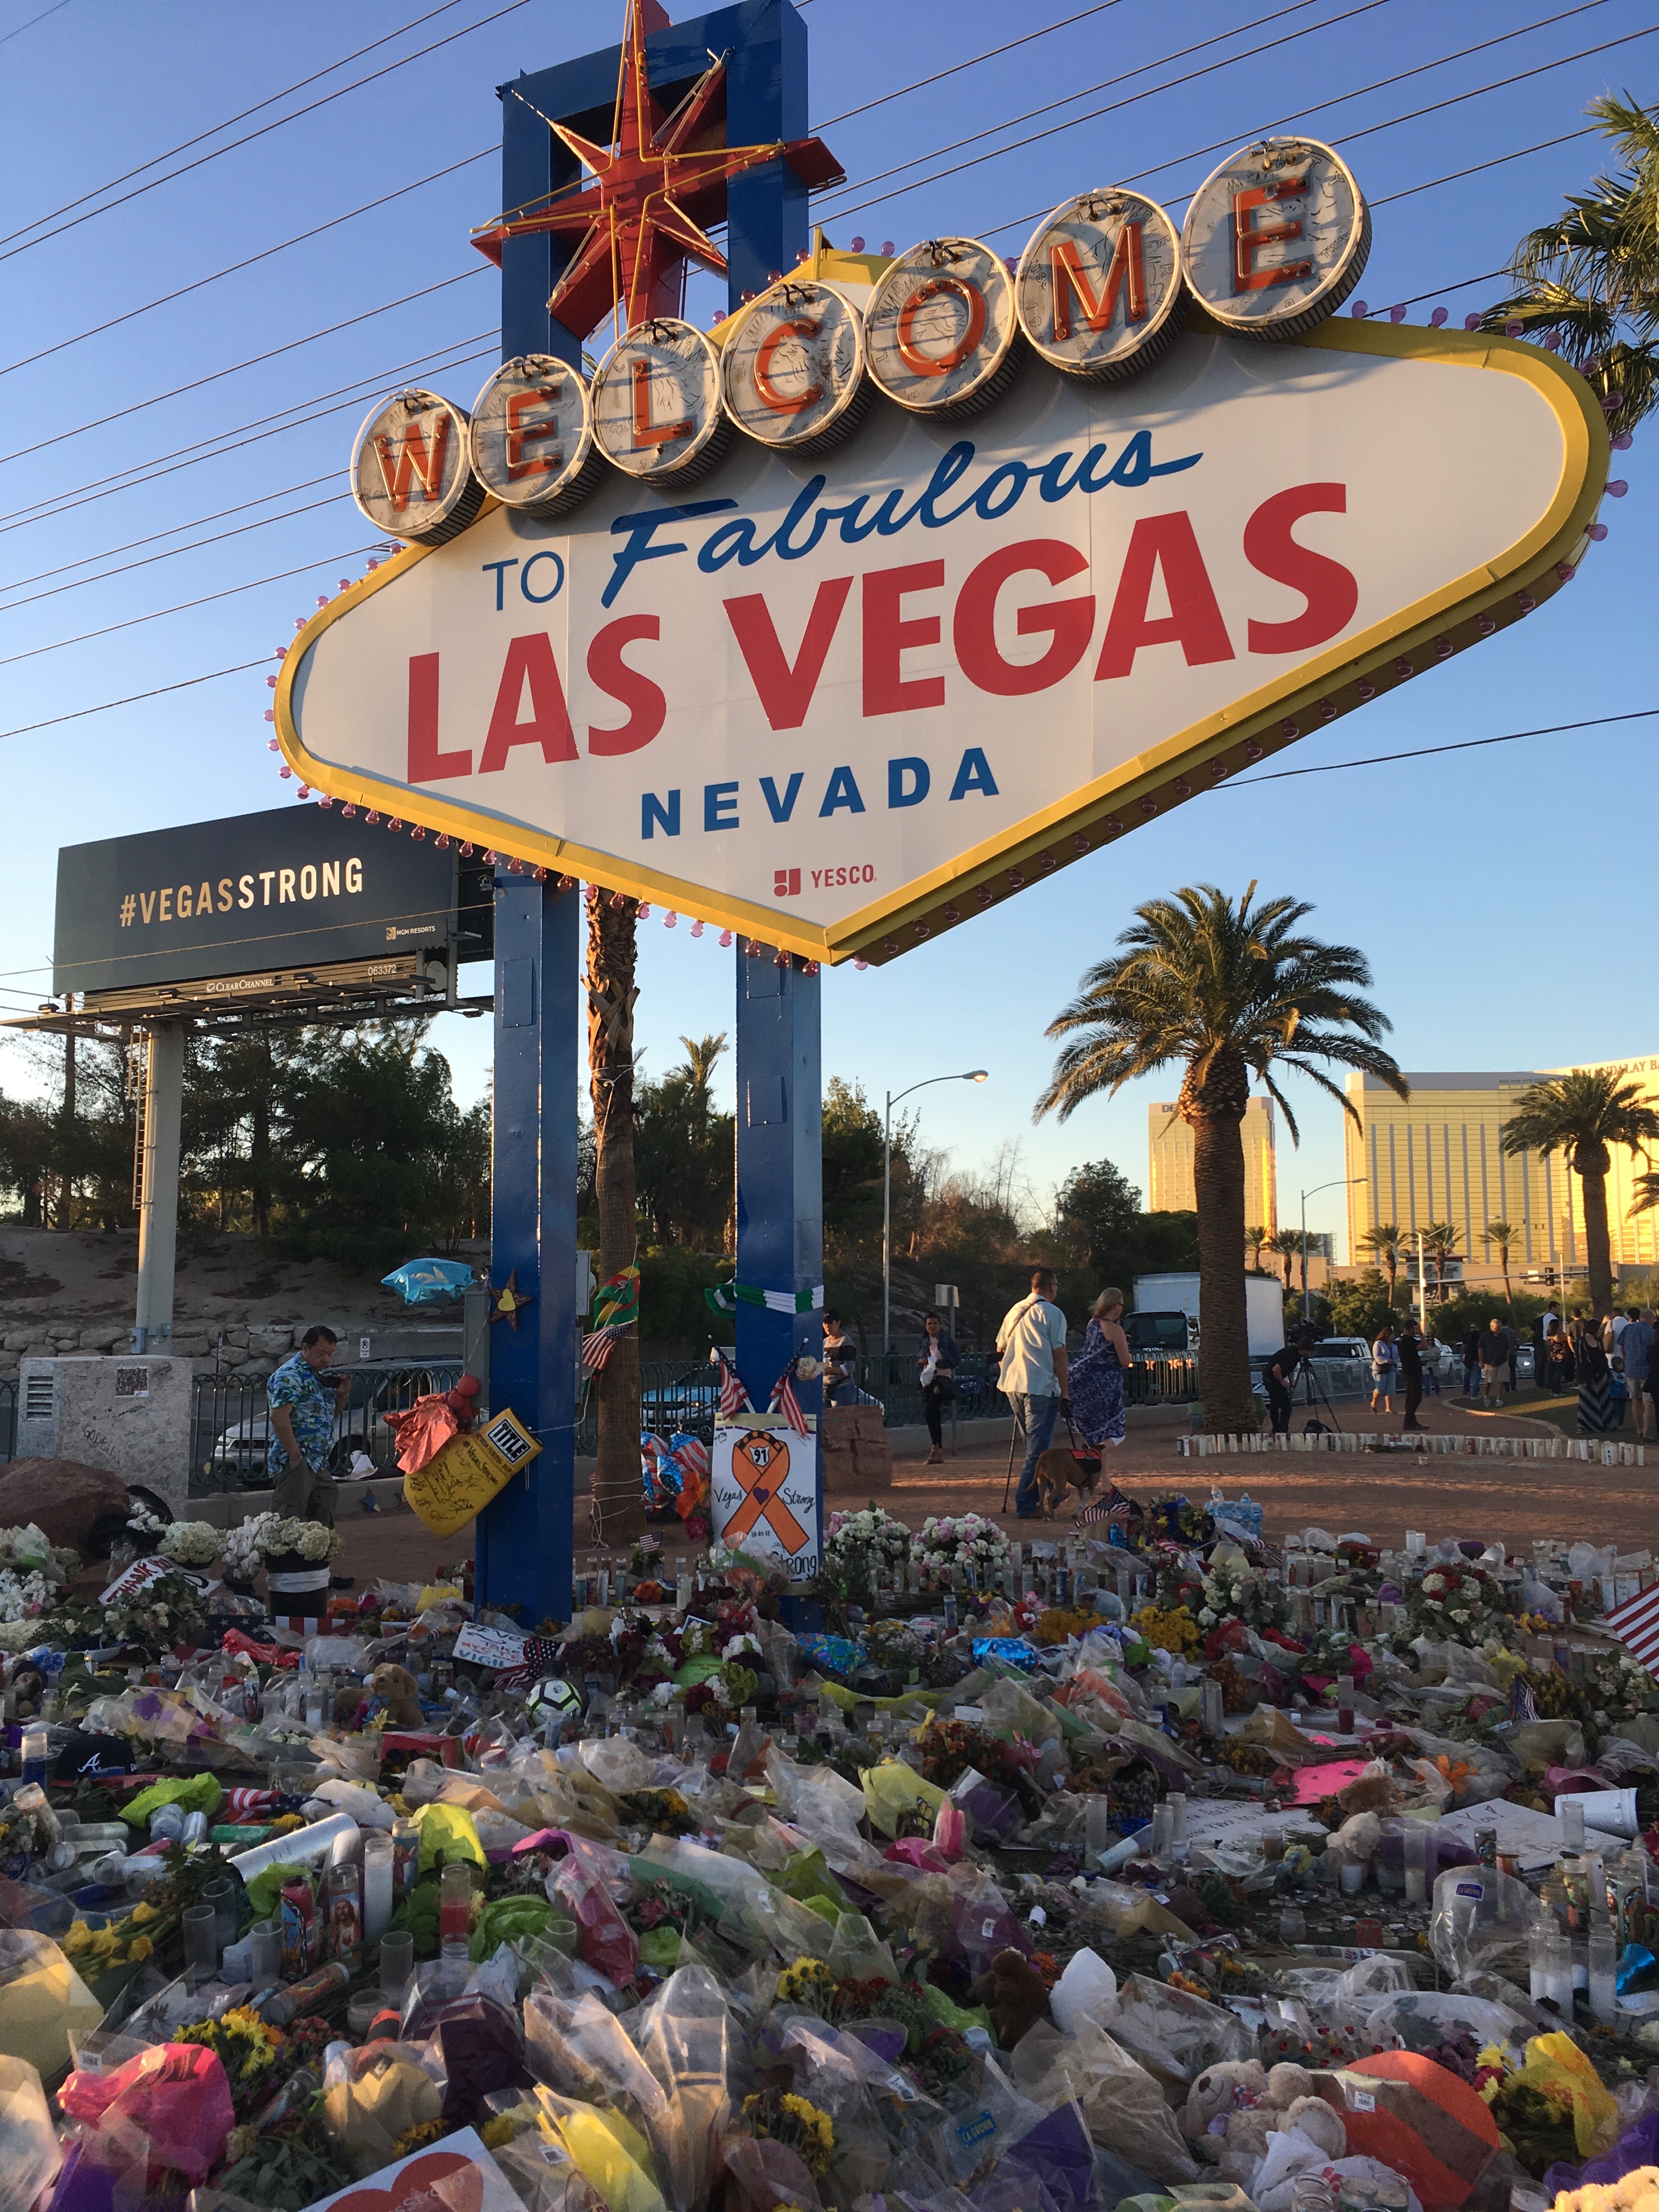 2017 Las Vegas shooting - Wikipedia